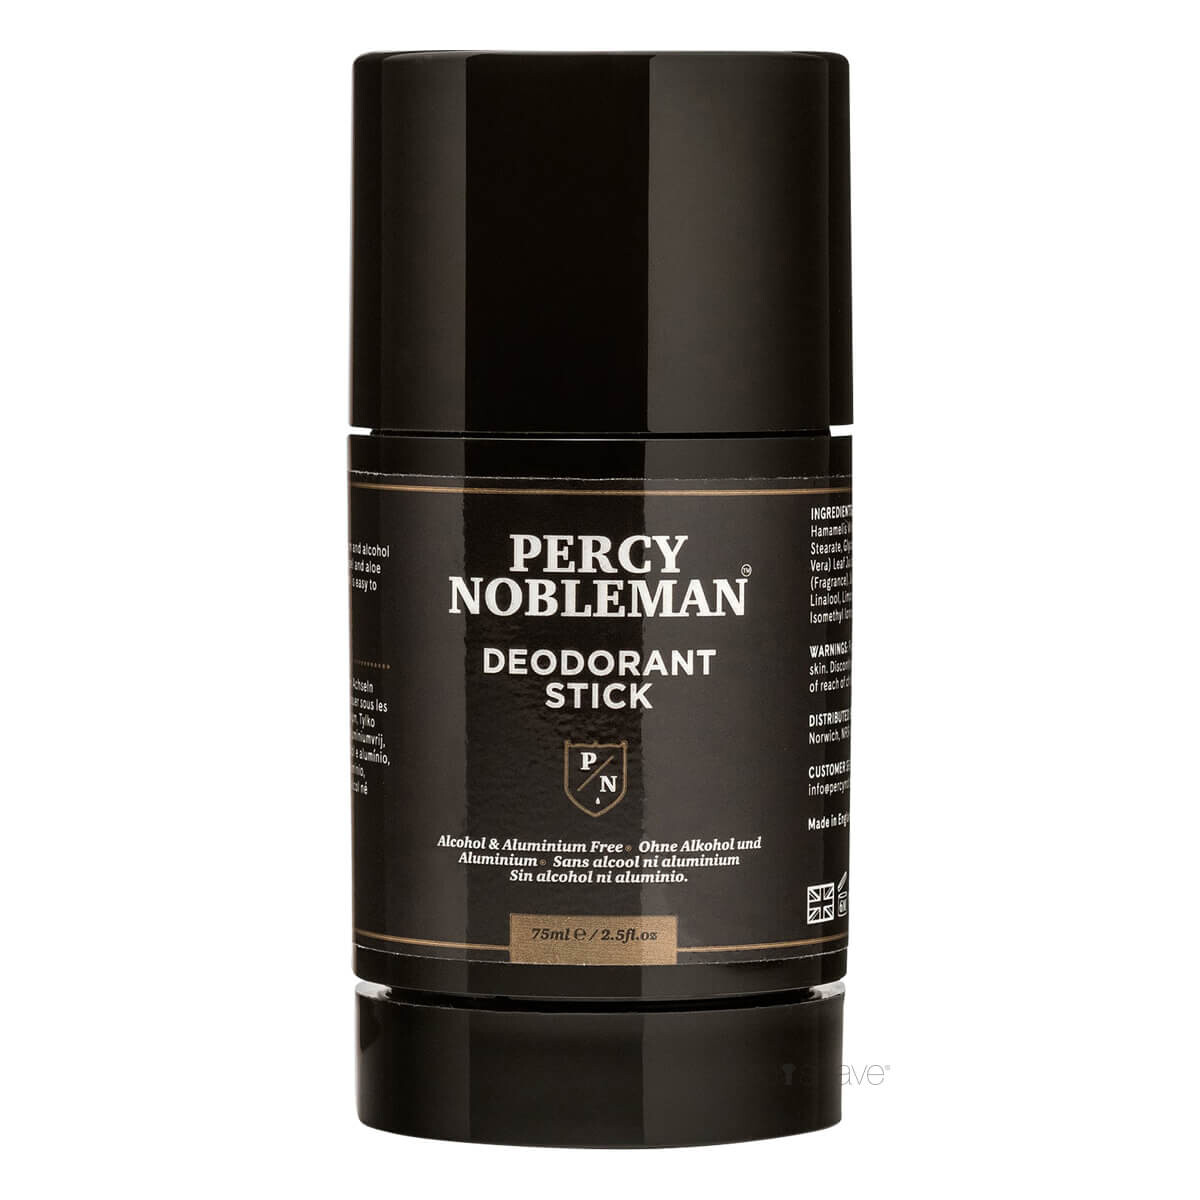 2: Percy Nobleman Deodorant Stick, 75 ml.